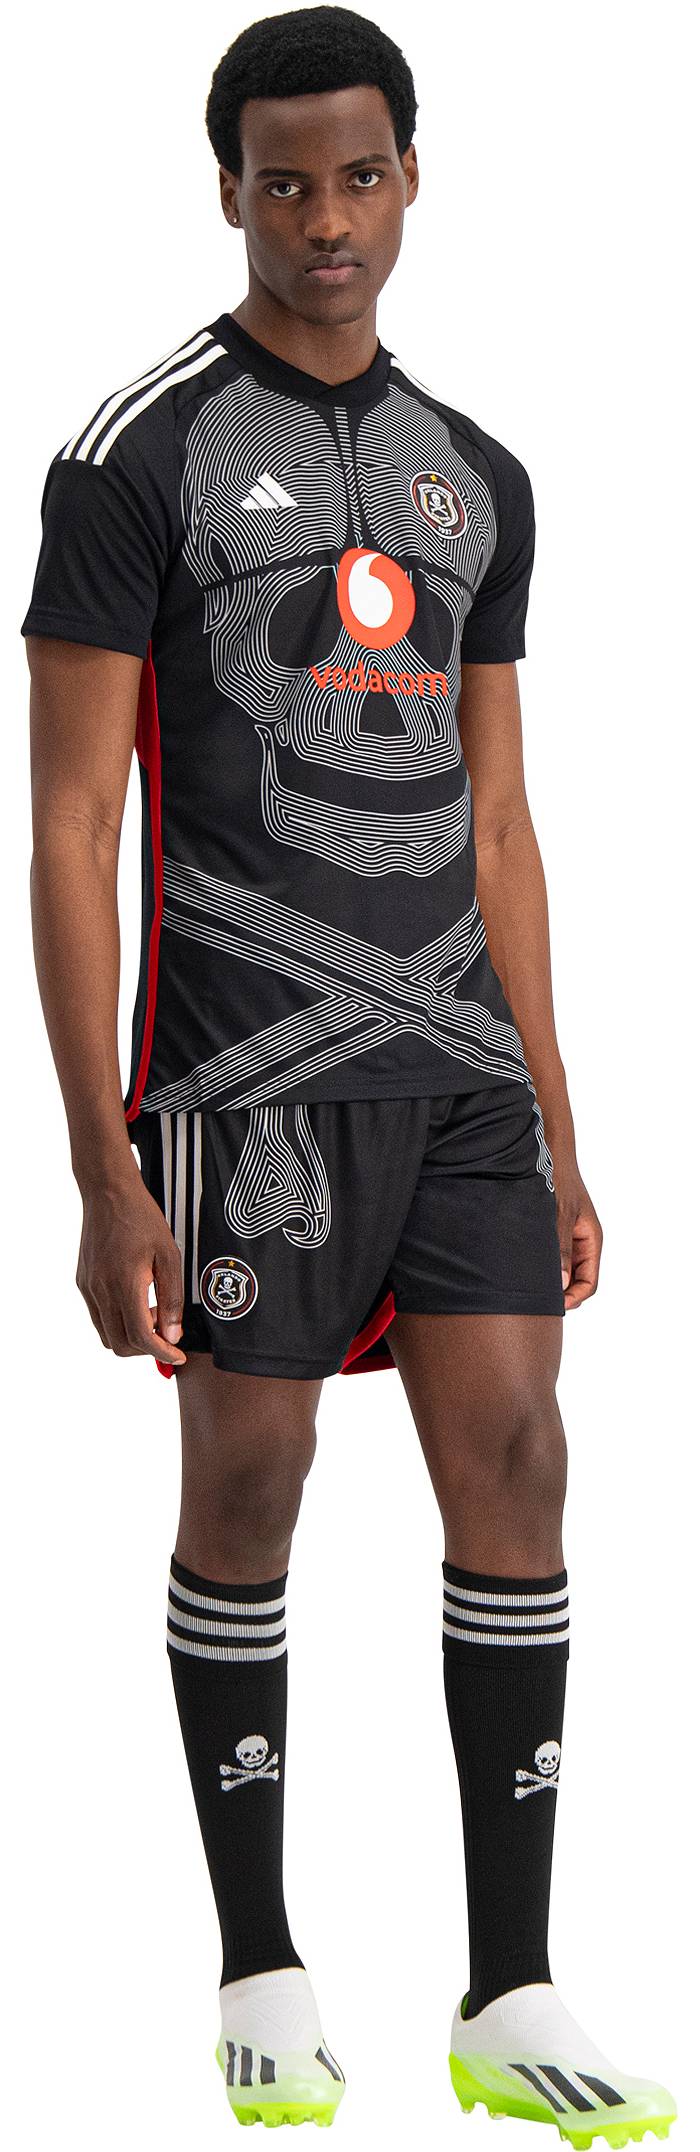 adidas presents Orlando Pirates new kits